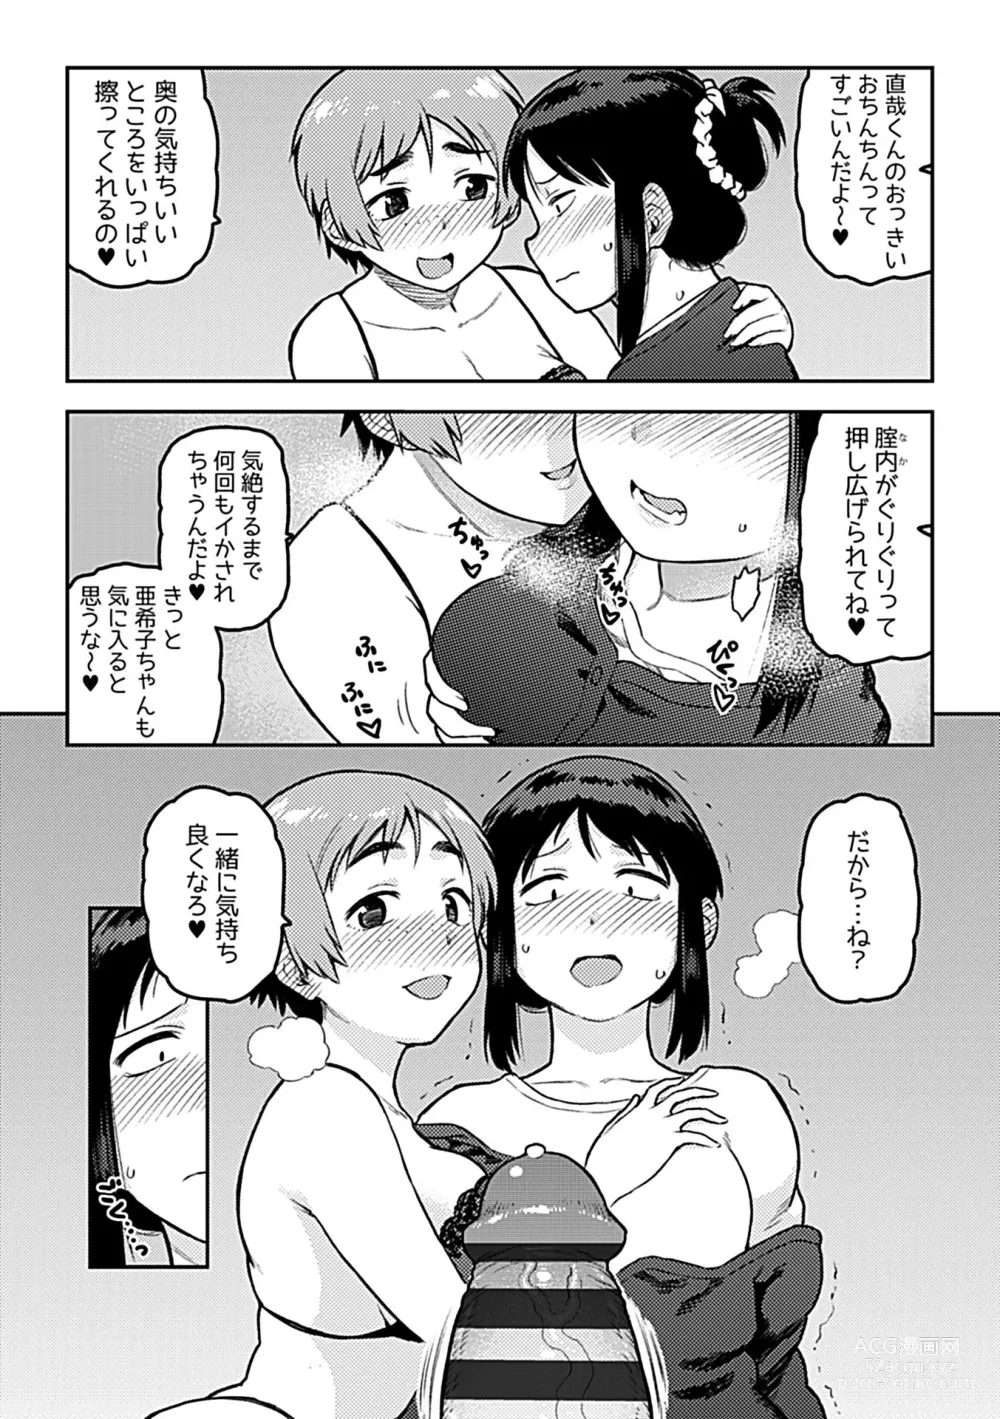 Page 181 of manga Aibiki